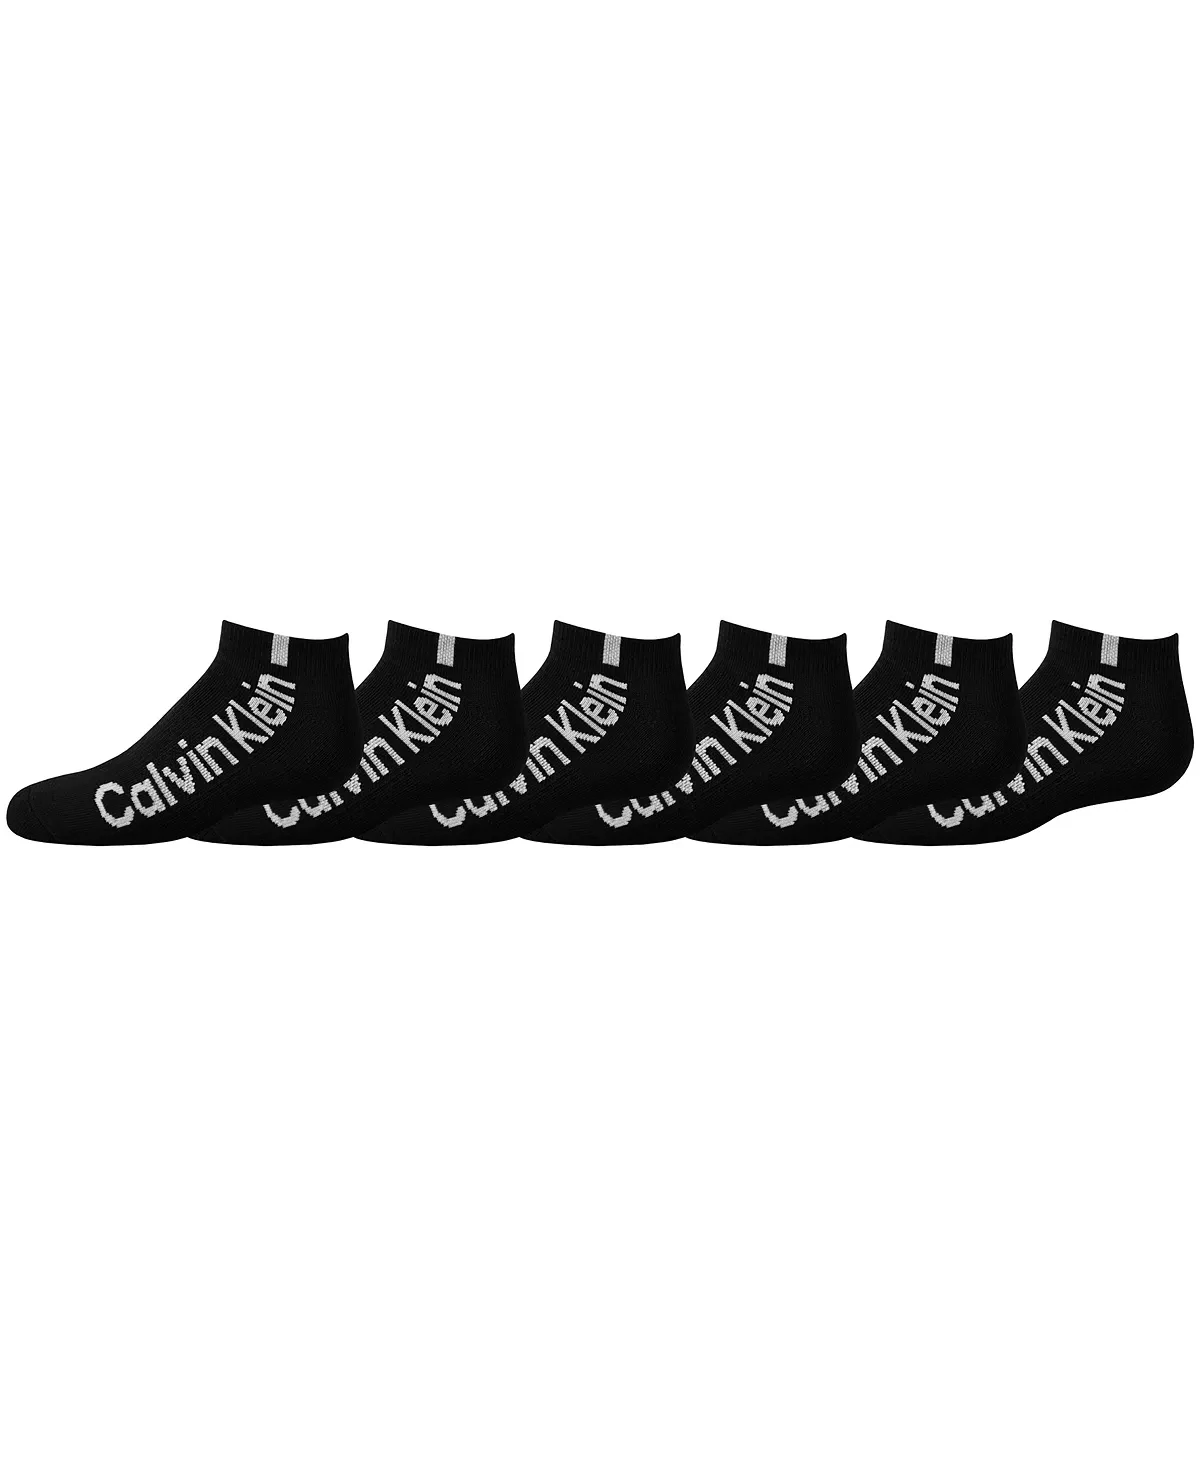 Calvin Klein Big Boys No Show Performance Socks, 6 Pack - Black Large 9-11